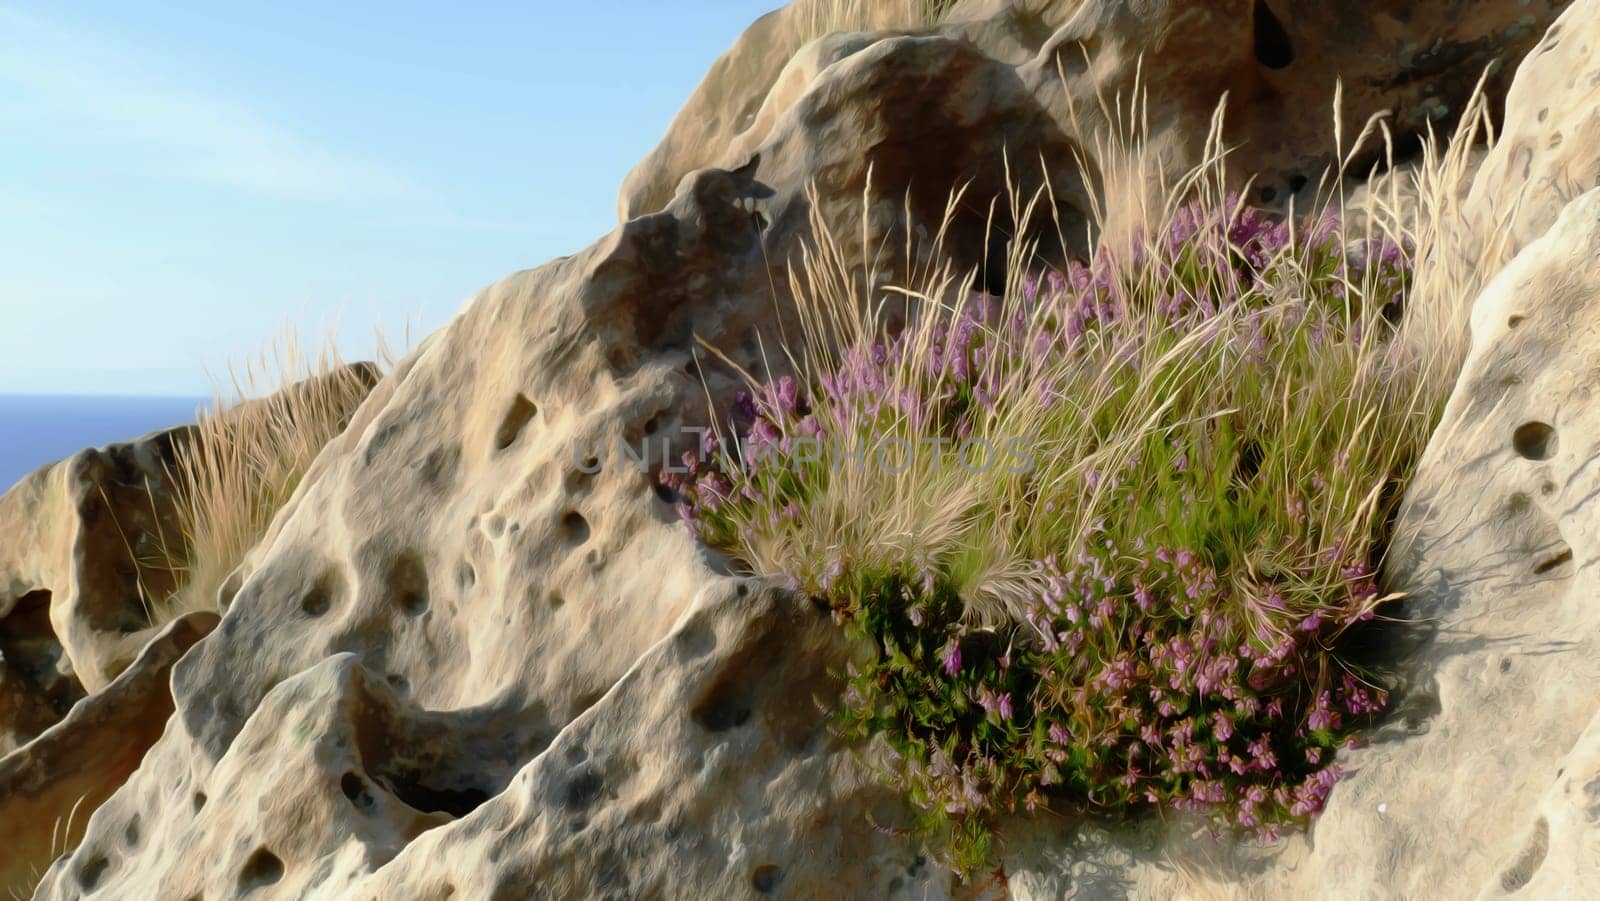 Painting rocks with plants on the sea coast by XabiDonostia